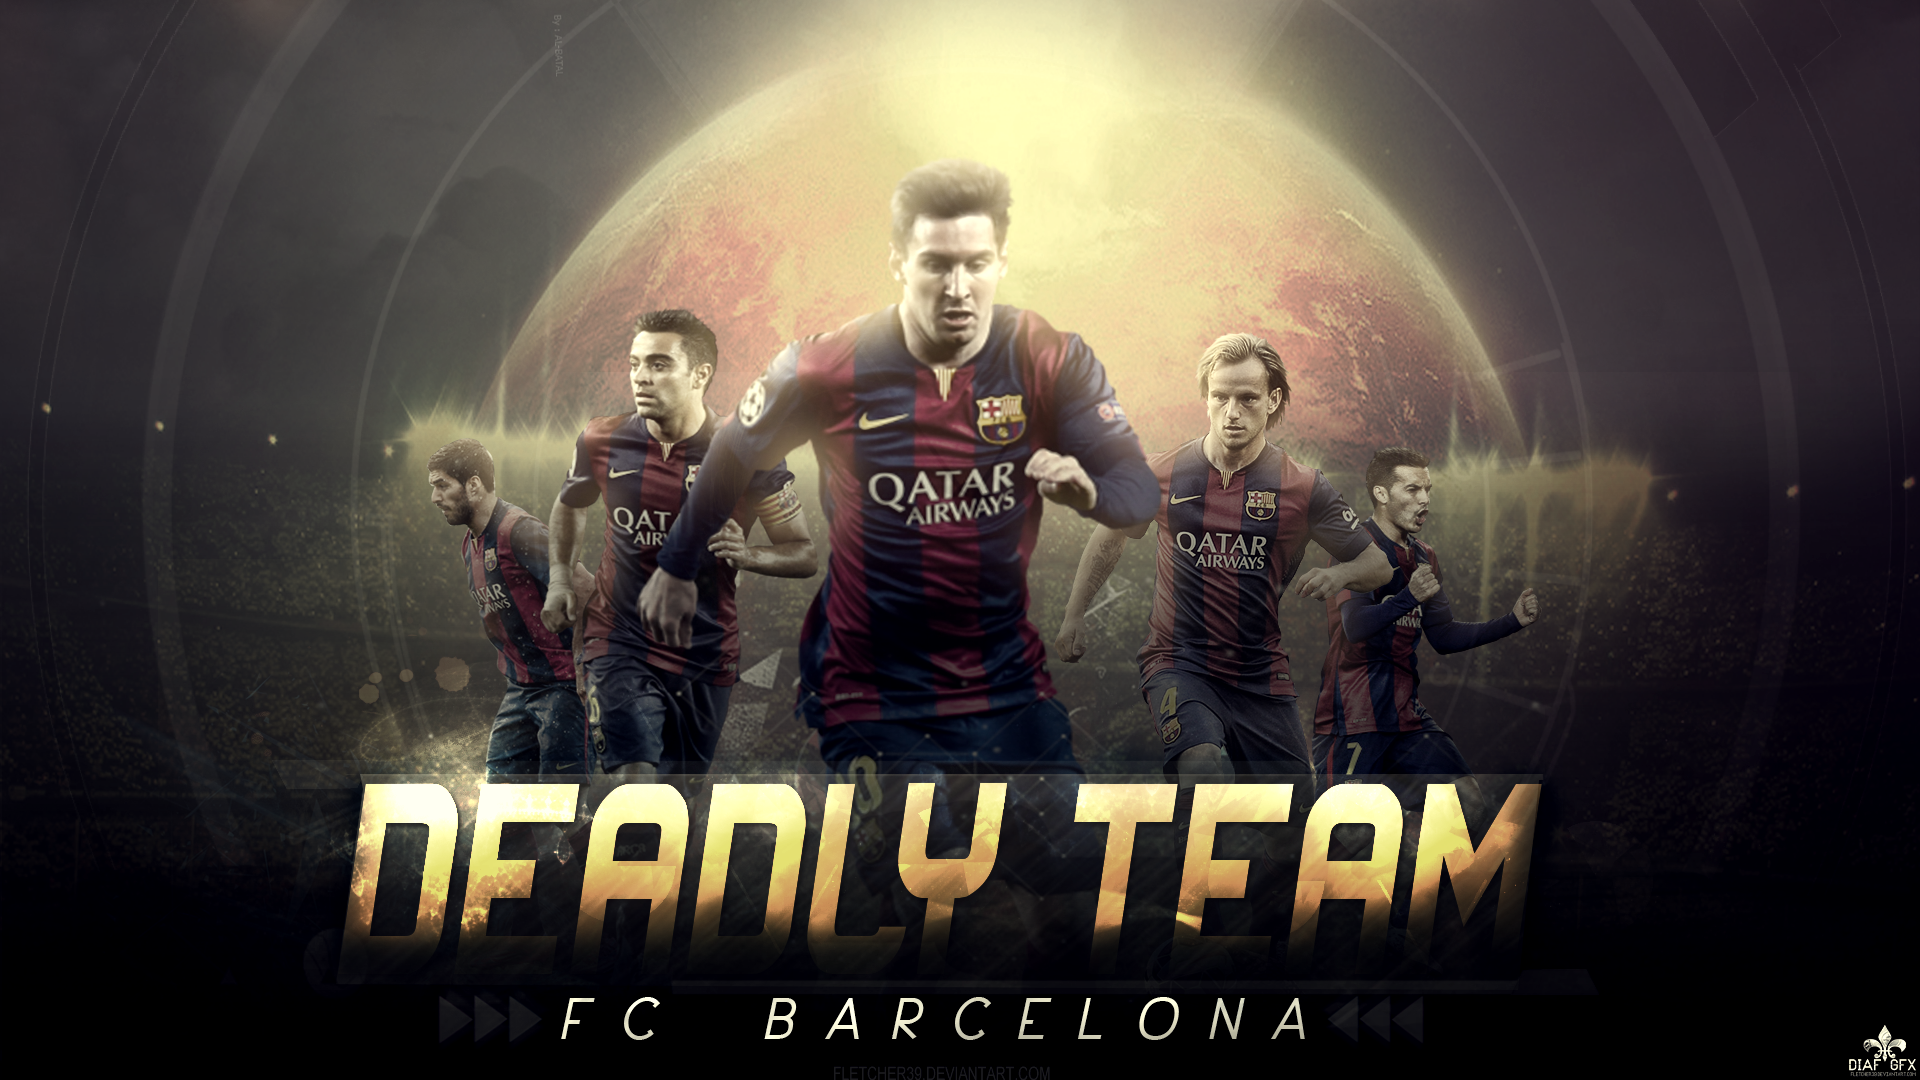 Fc Barcelona Wallpaper The Deadly Team by FLETCHER39